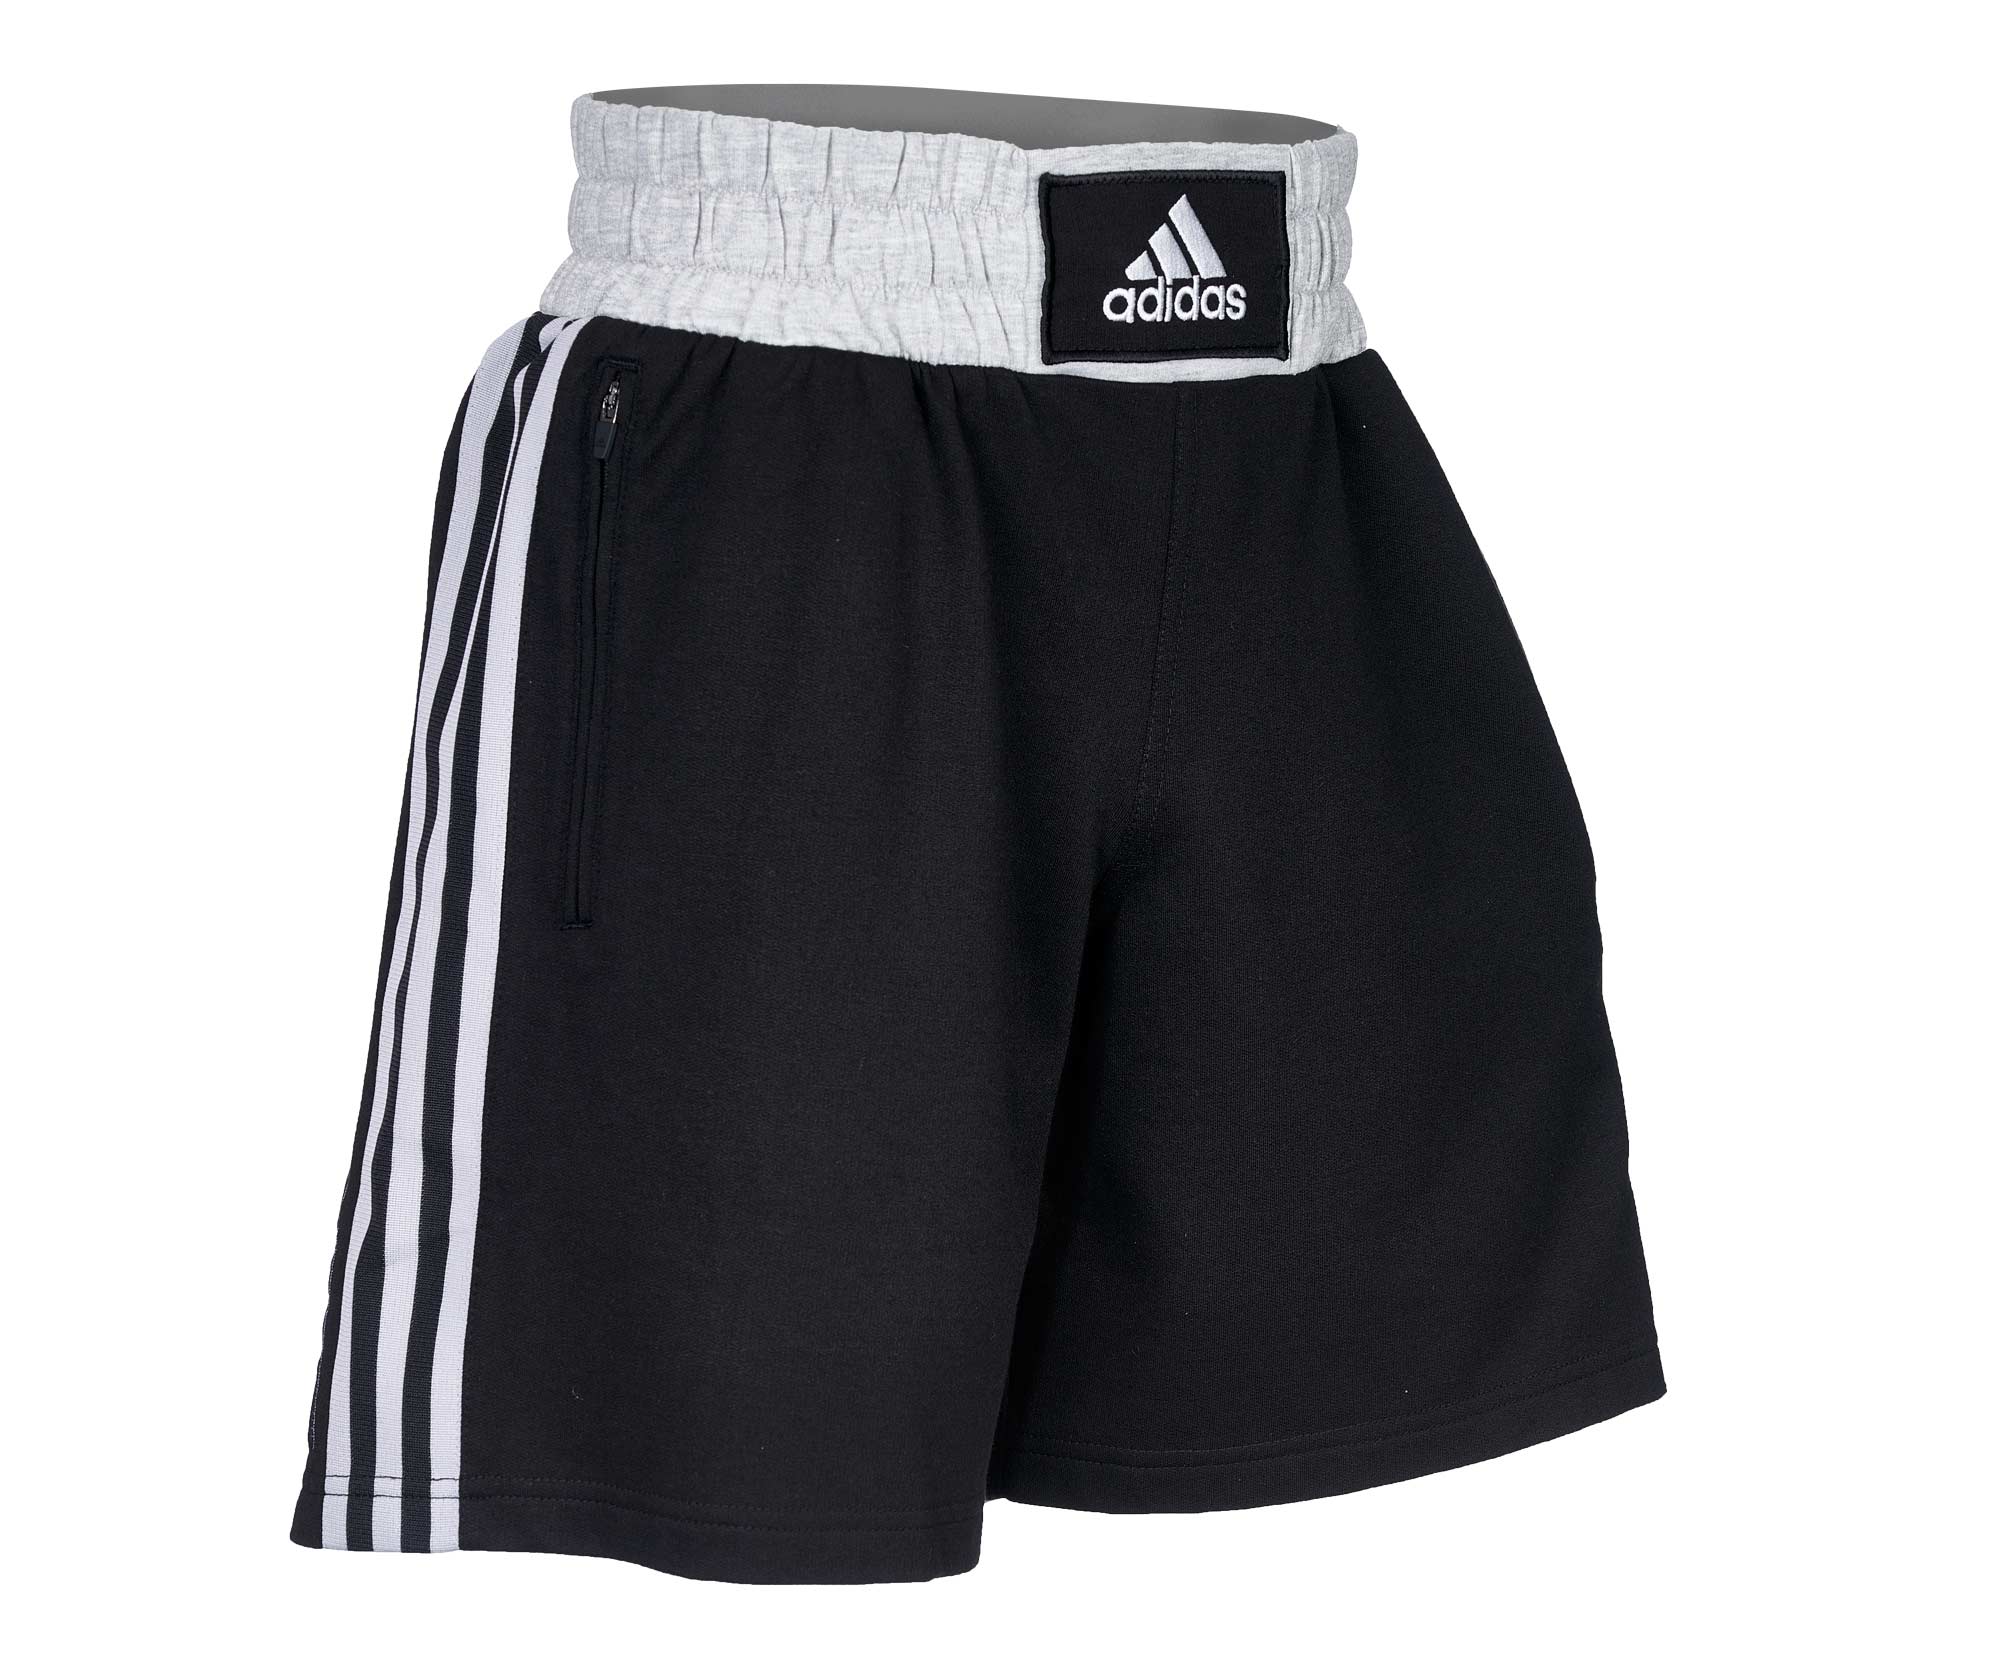 adidas boxing wear classic shorts BXWSH01